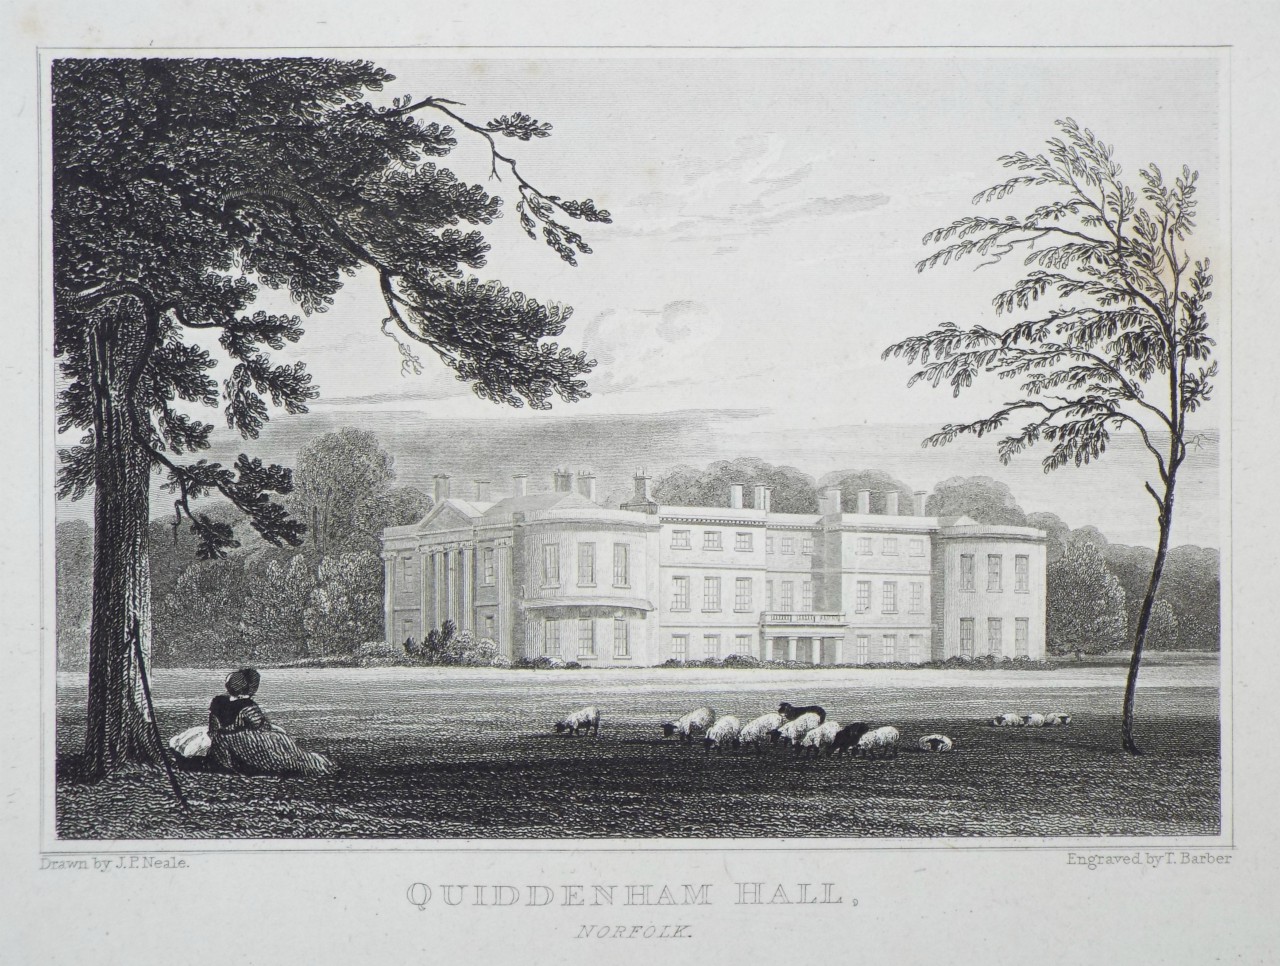 Print - Quiddenham Hall, Norfolk. - Barber